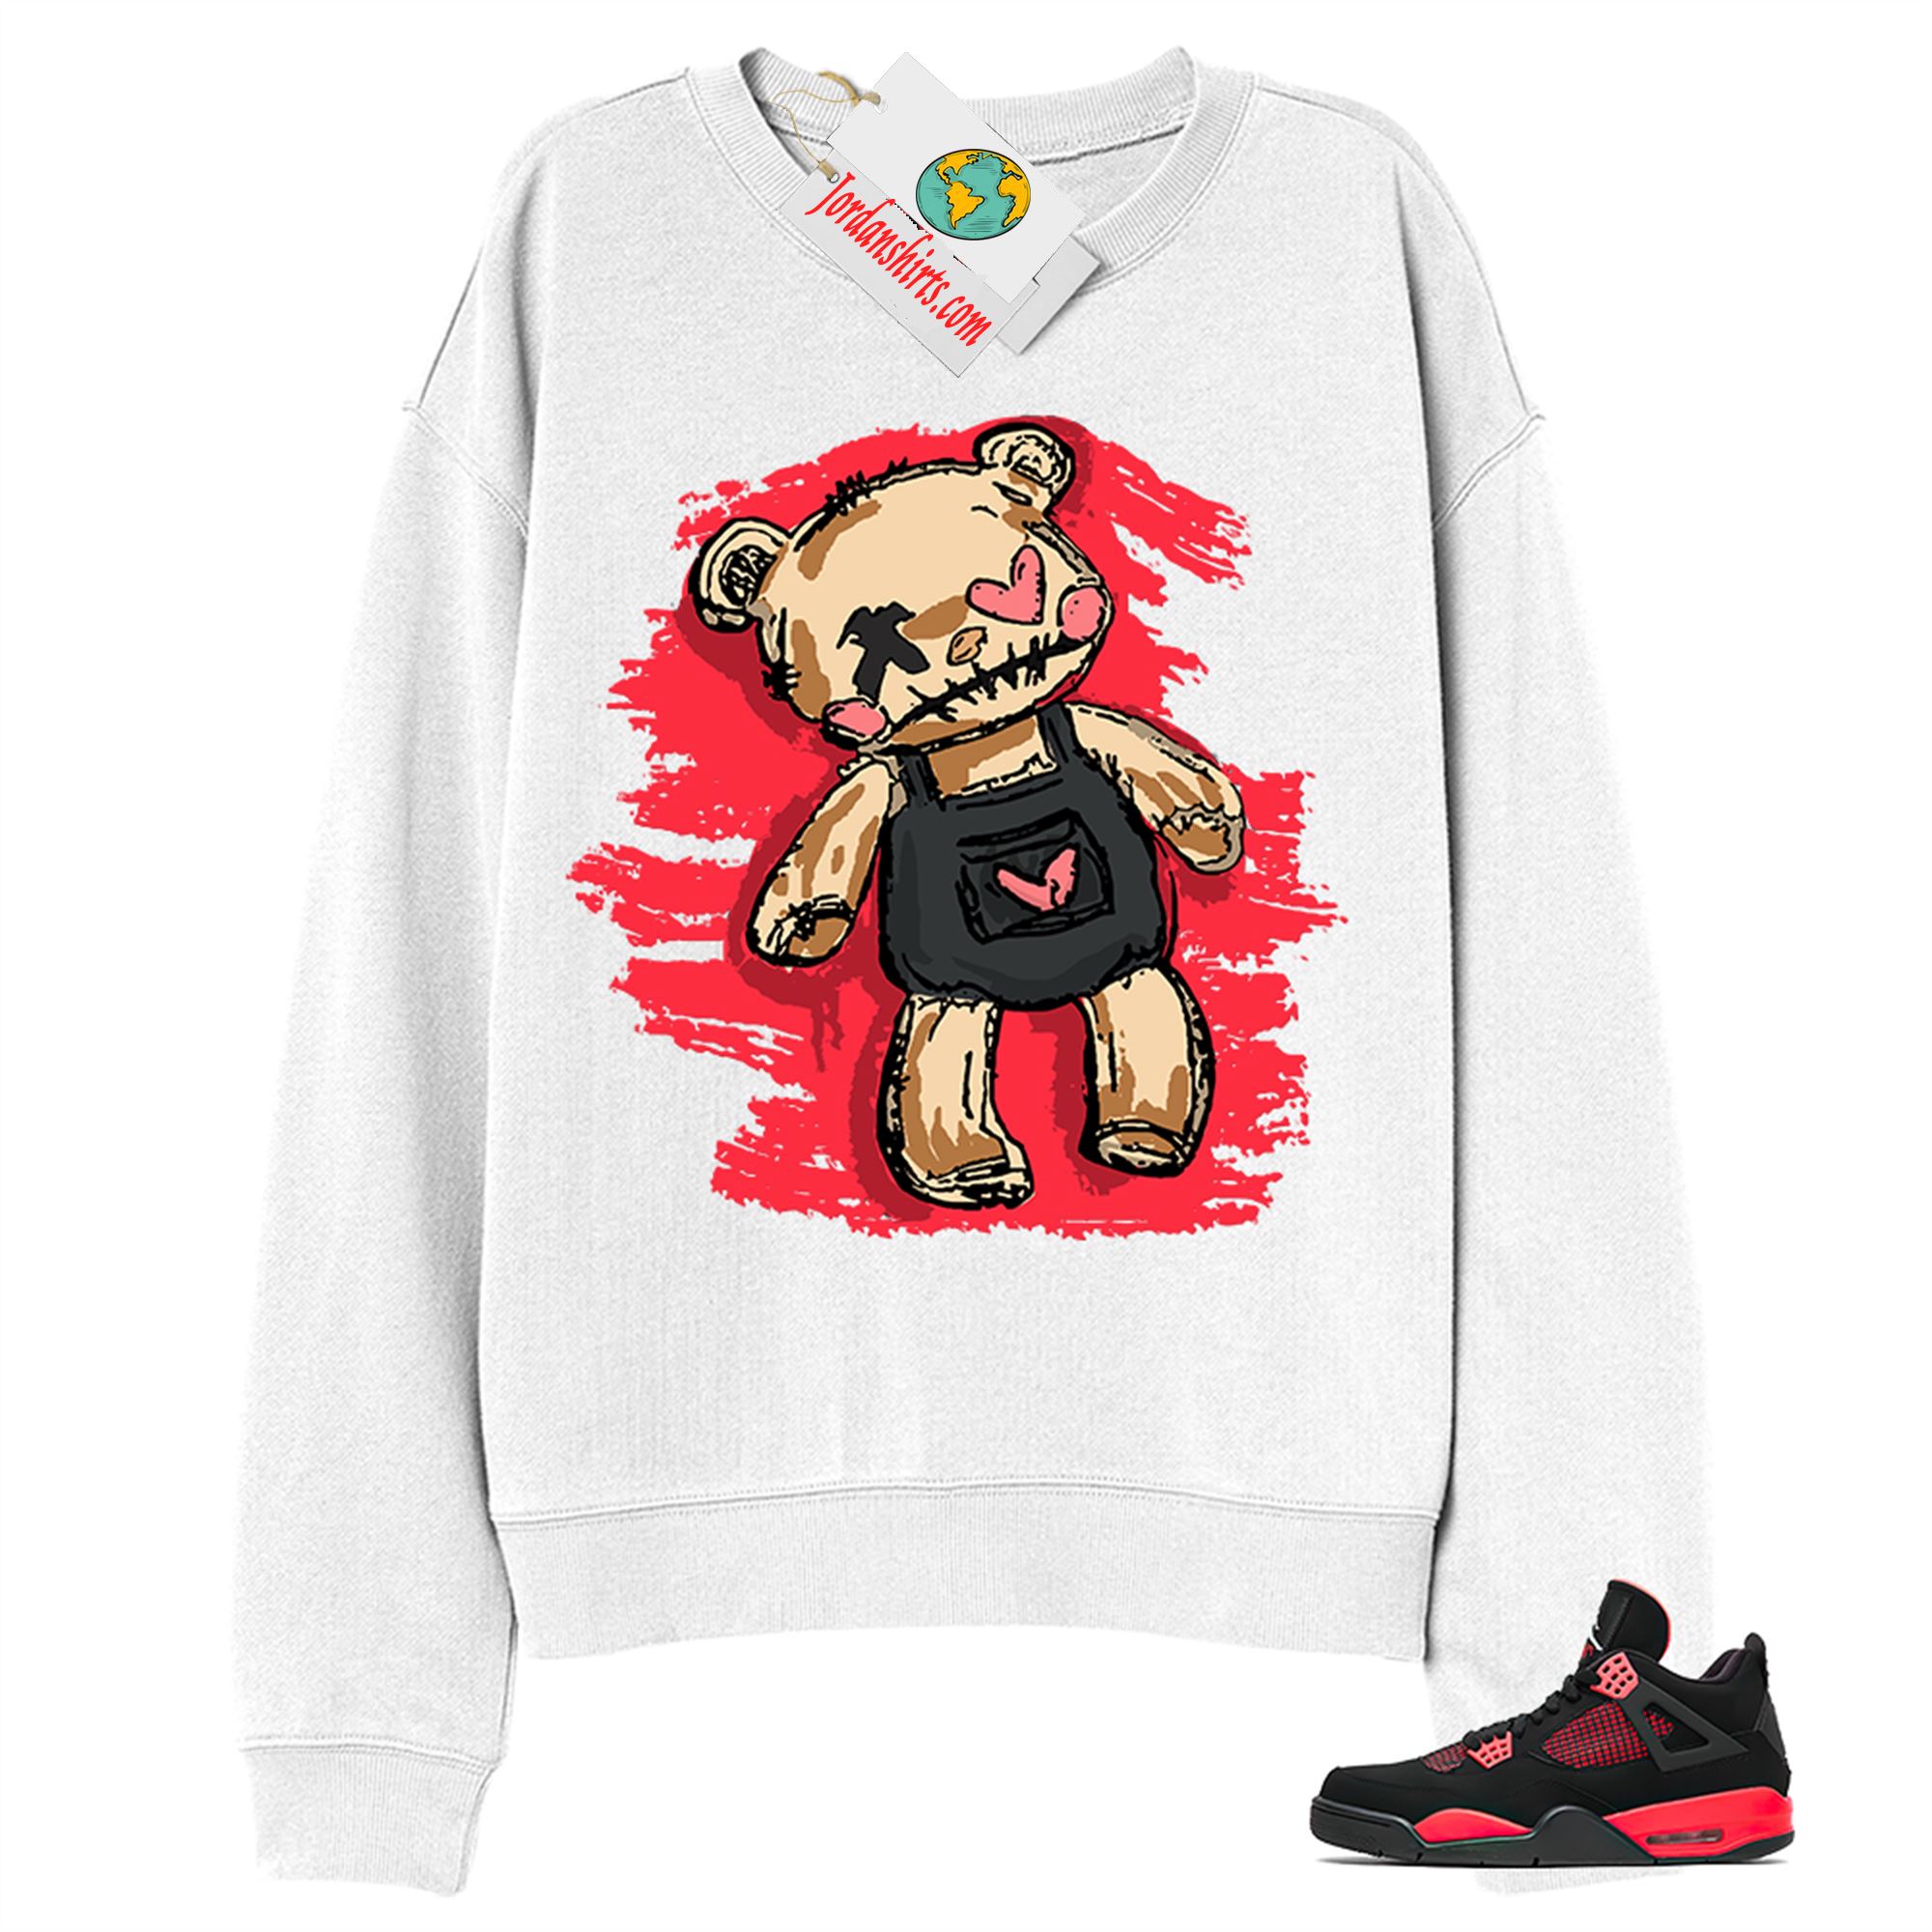 Jordan 4 Sweatshirt, Teddy Bear Broken Heart White Sweatshirt Air Jordan 4 Red Thunder 4s Size Up To 5xl